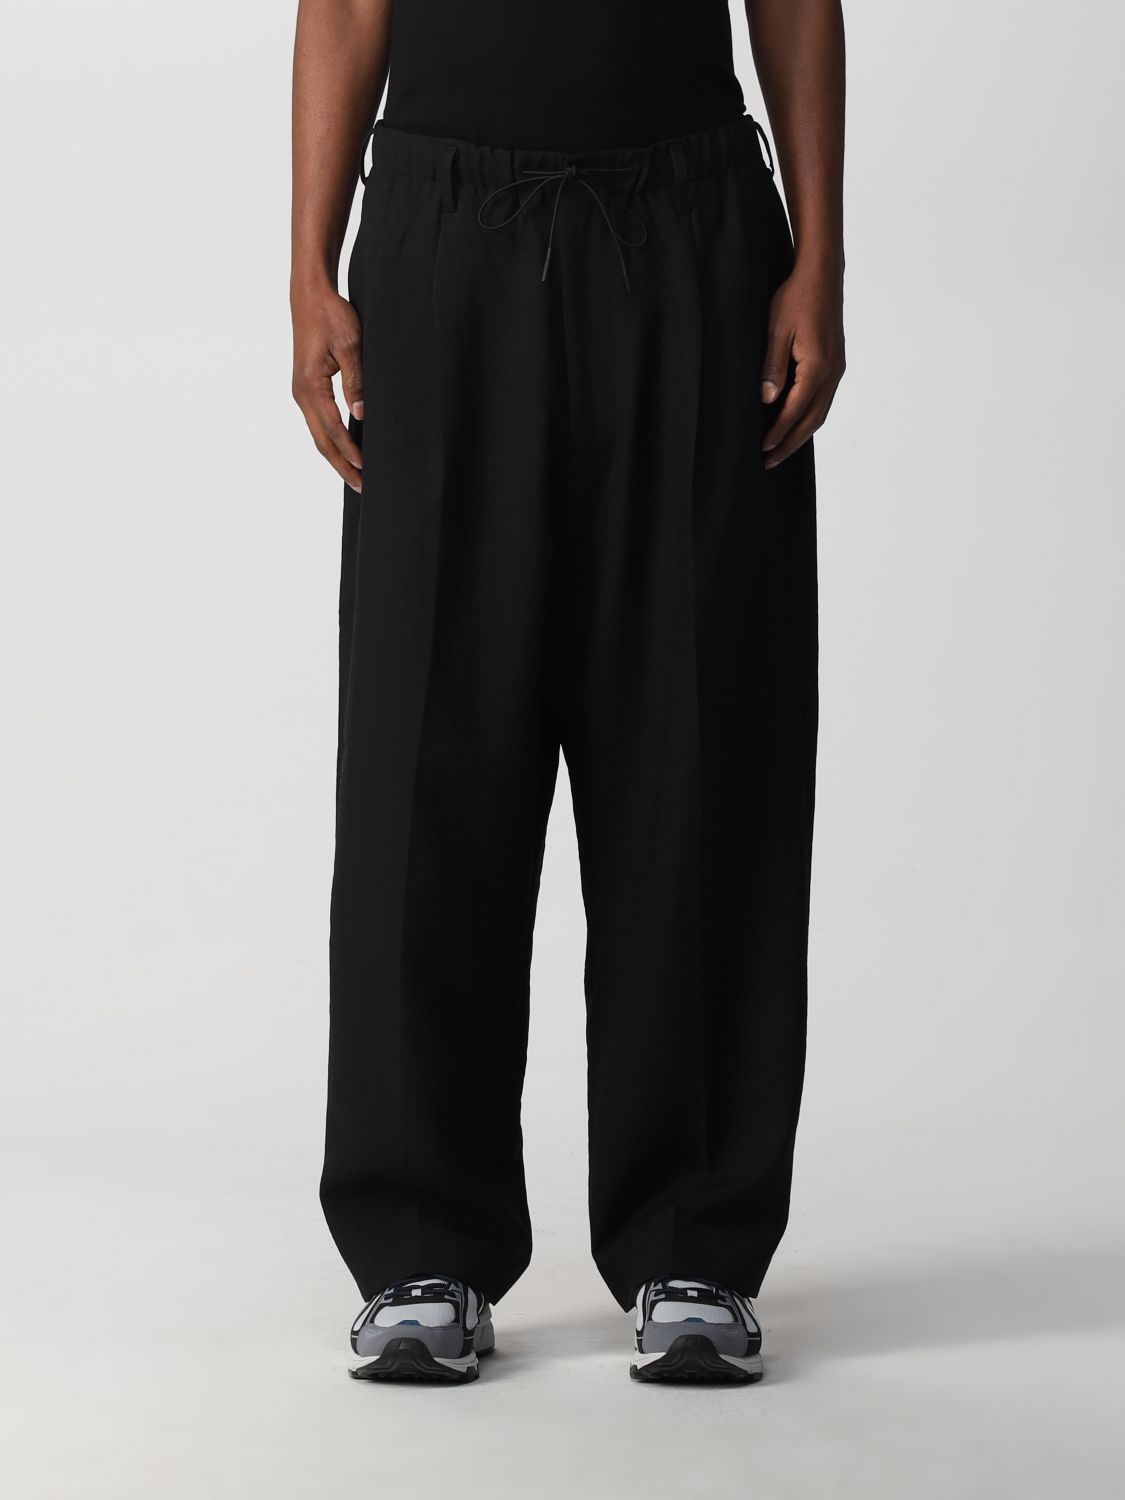 Y-3: pants for man - Black | Y-3 pants HG6082 online at GIGLIO.COM